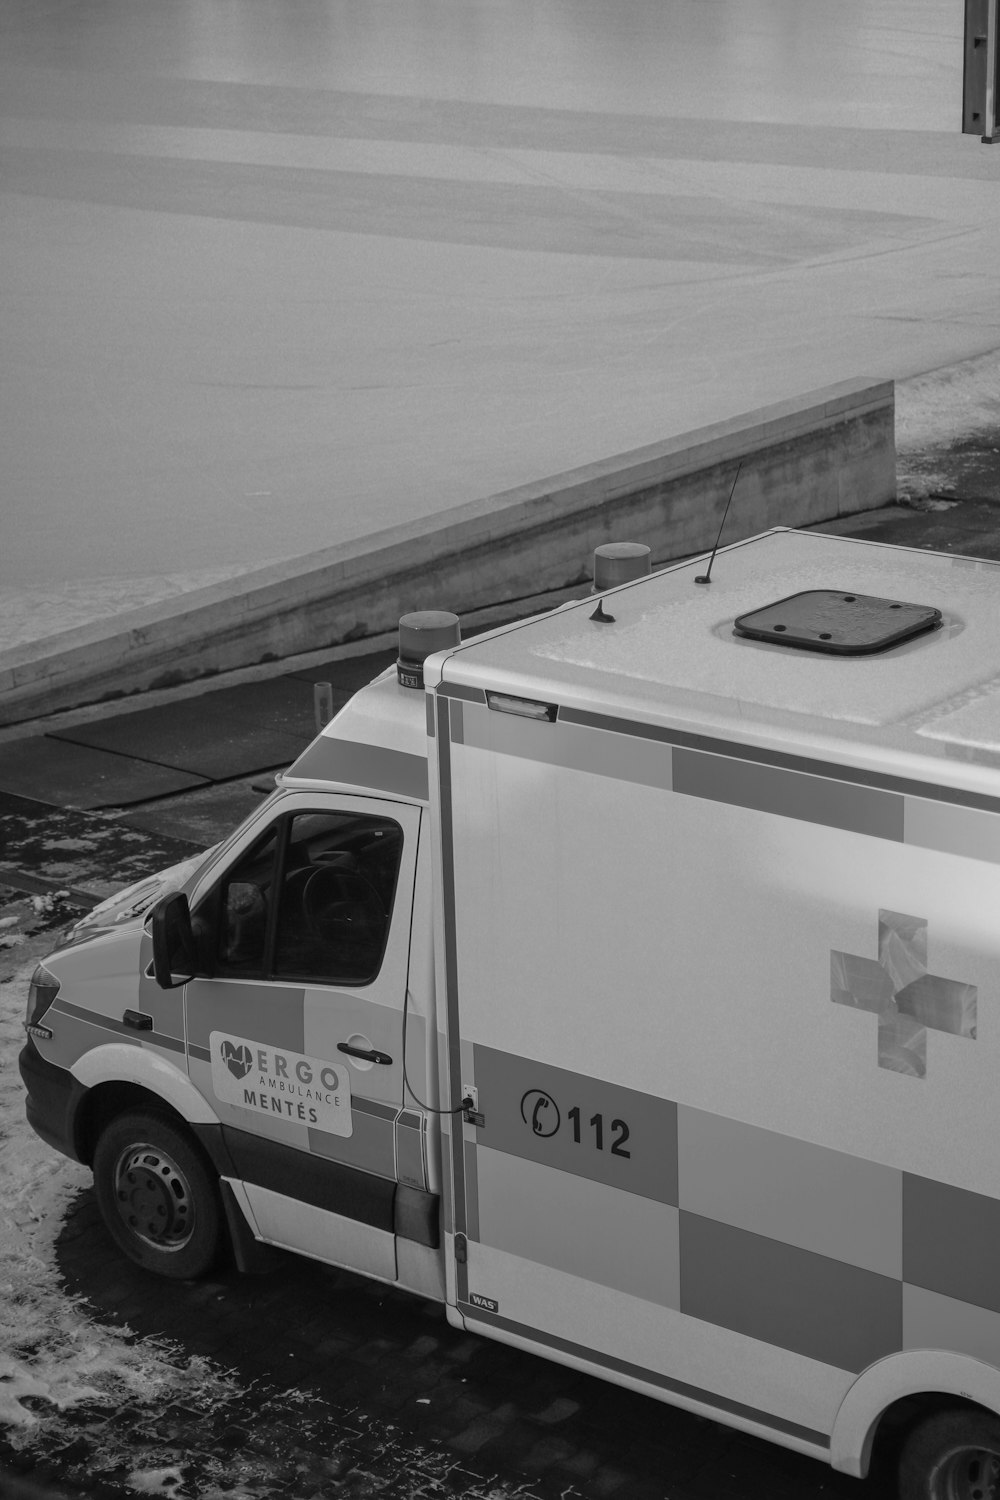 a black and white photo of an ambulance